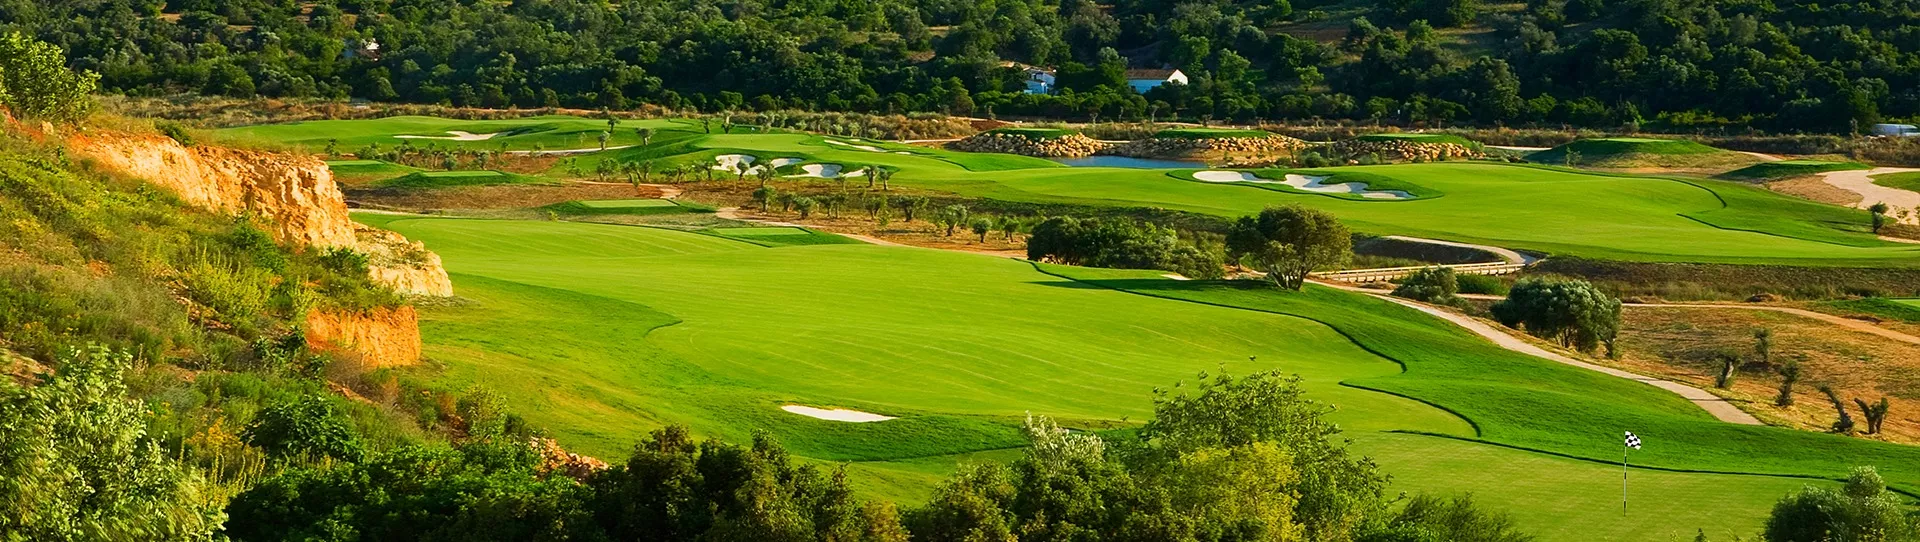 Portugal golf holidays - Amendoeira Tri Experience - Photo 1